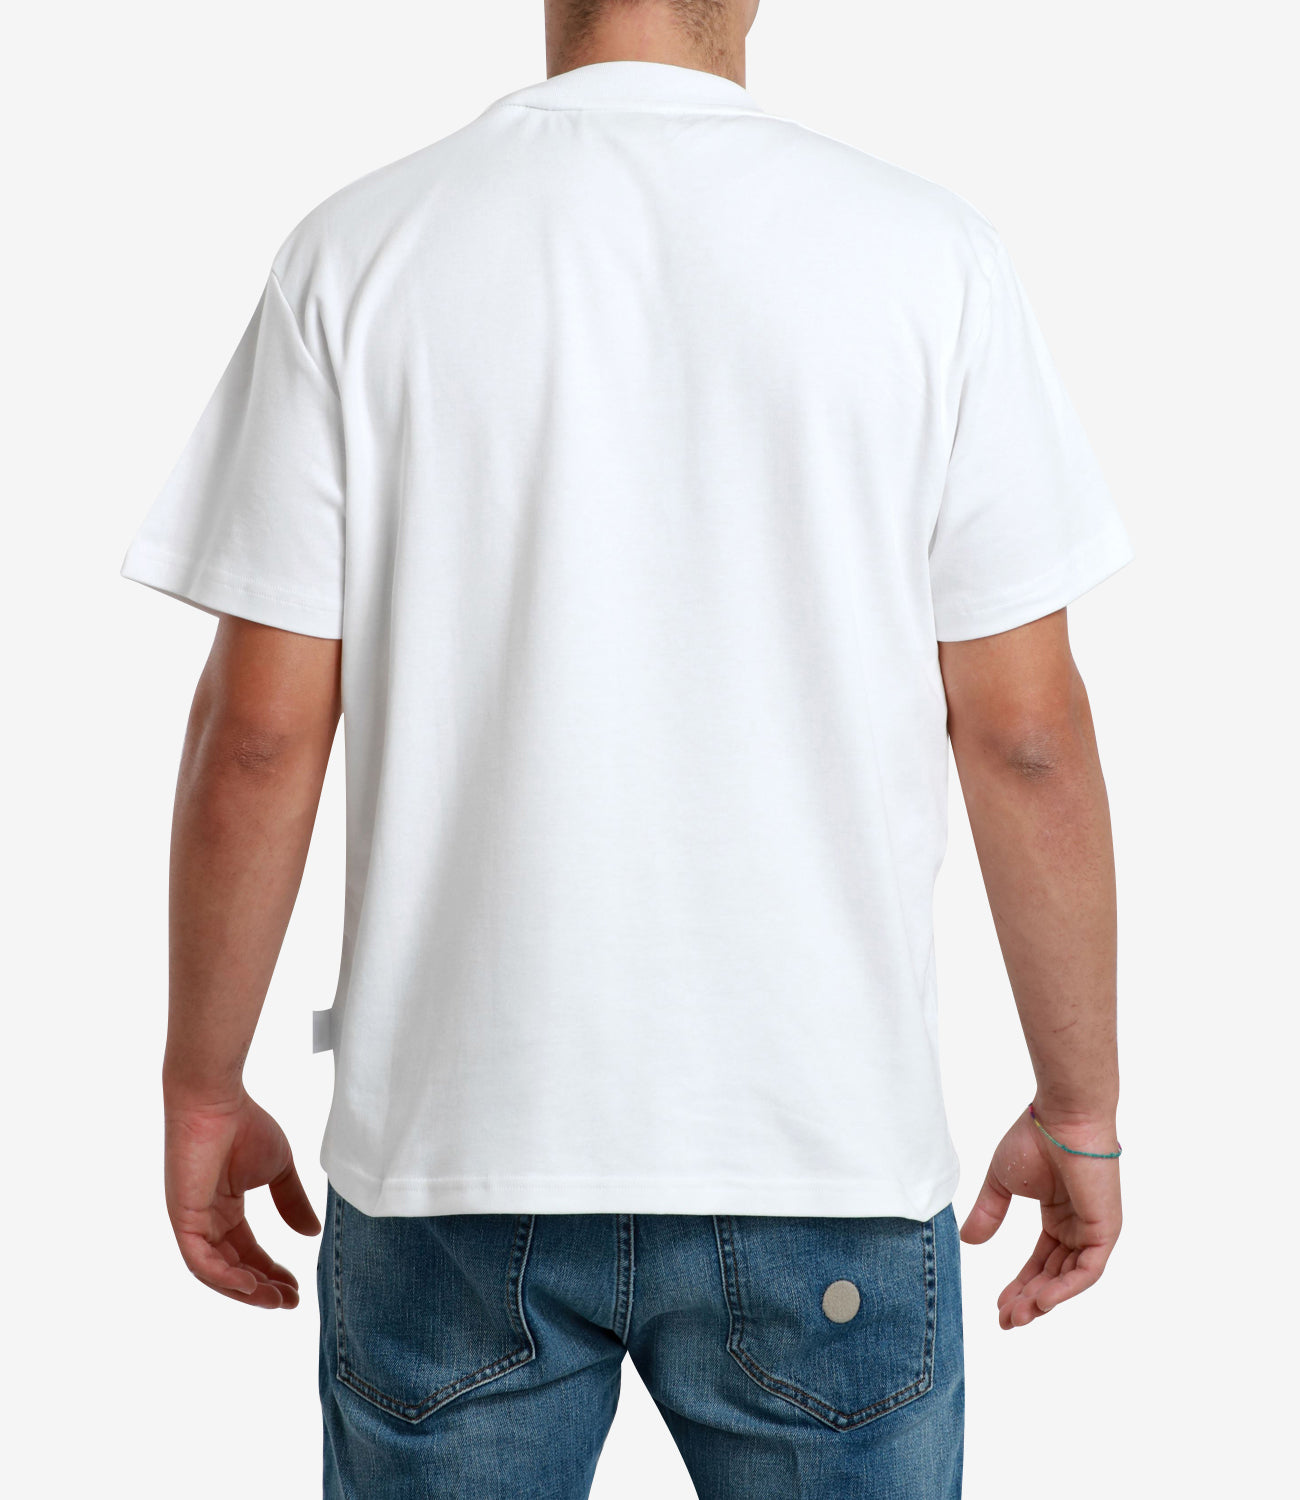 GCDS | White T-Shirt